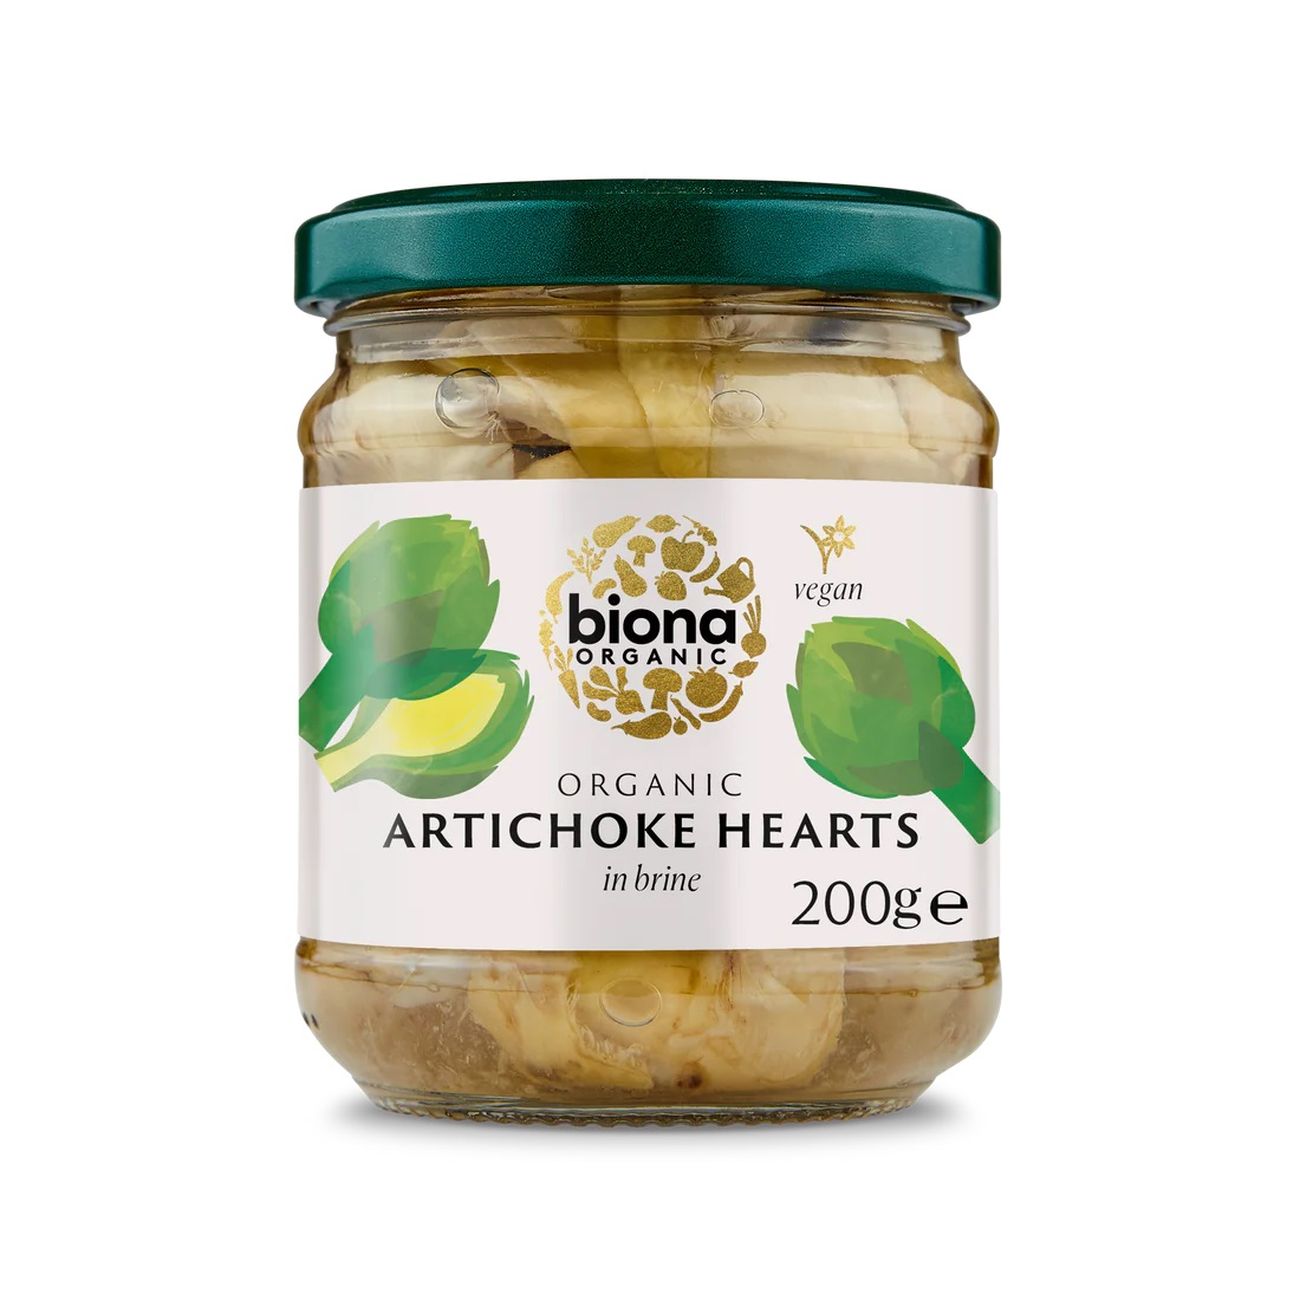 Organic Artichoke Hearts 200g